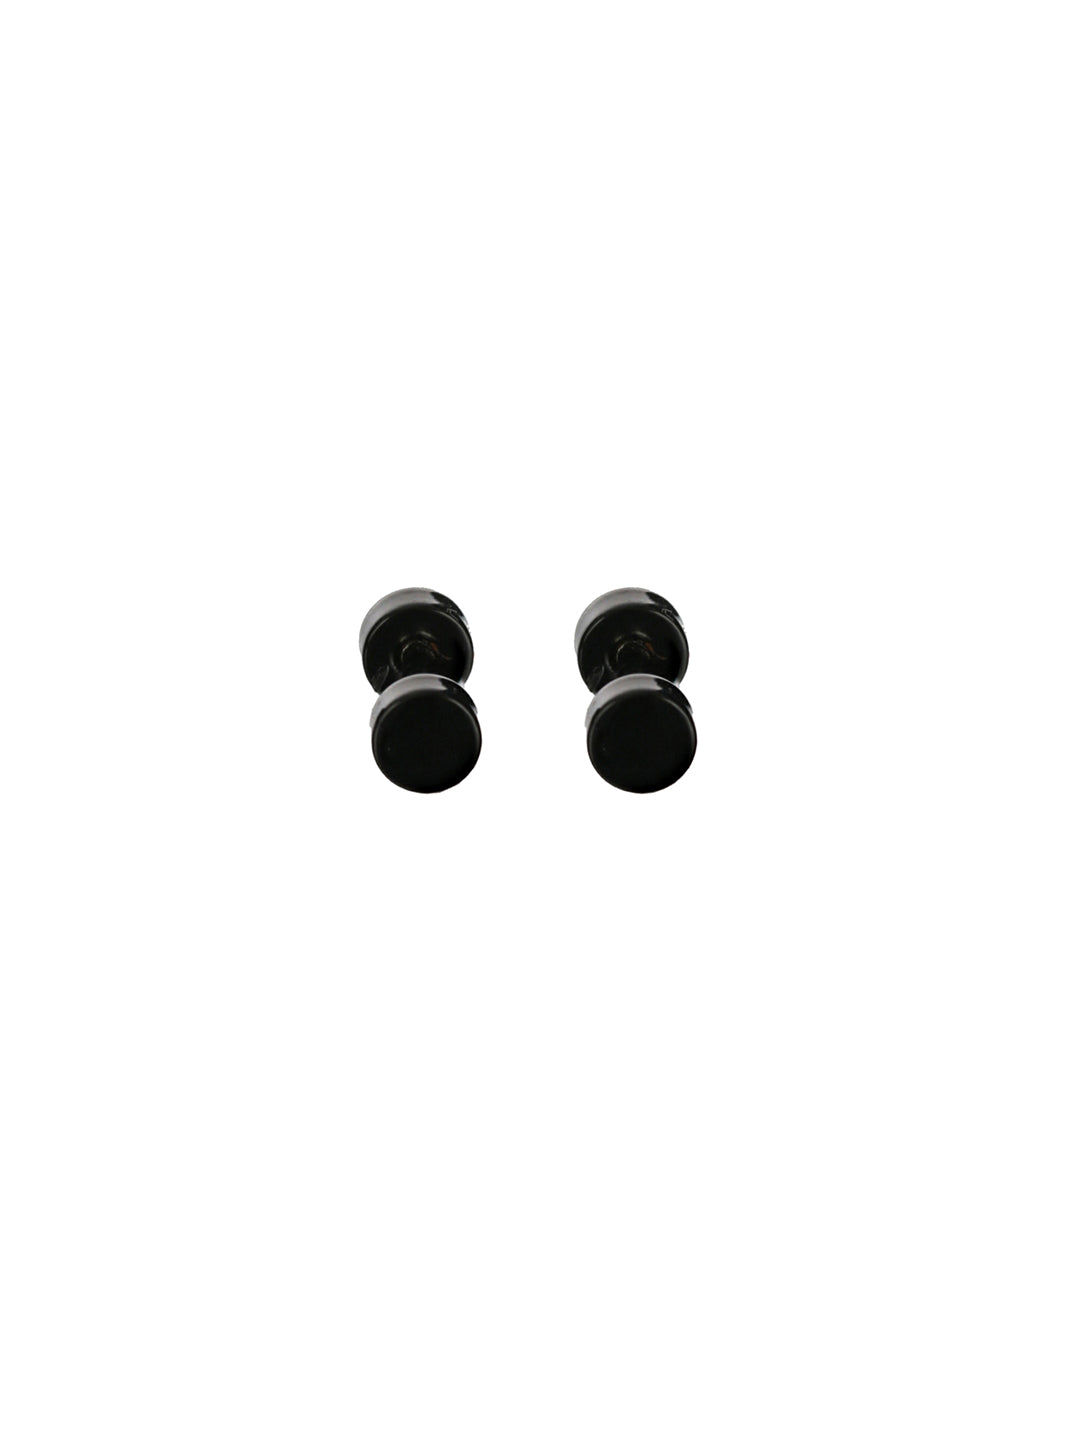 Black Onyx Stud Earrings for Men  Round Mens Stud Earrings  for Men   Nadin Art Design  Personalized Jewelry